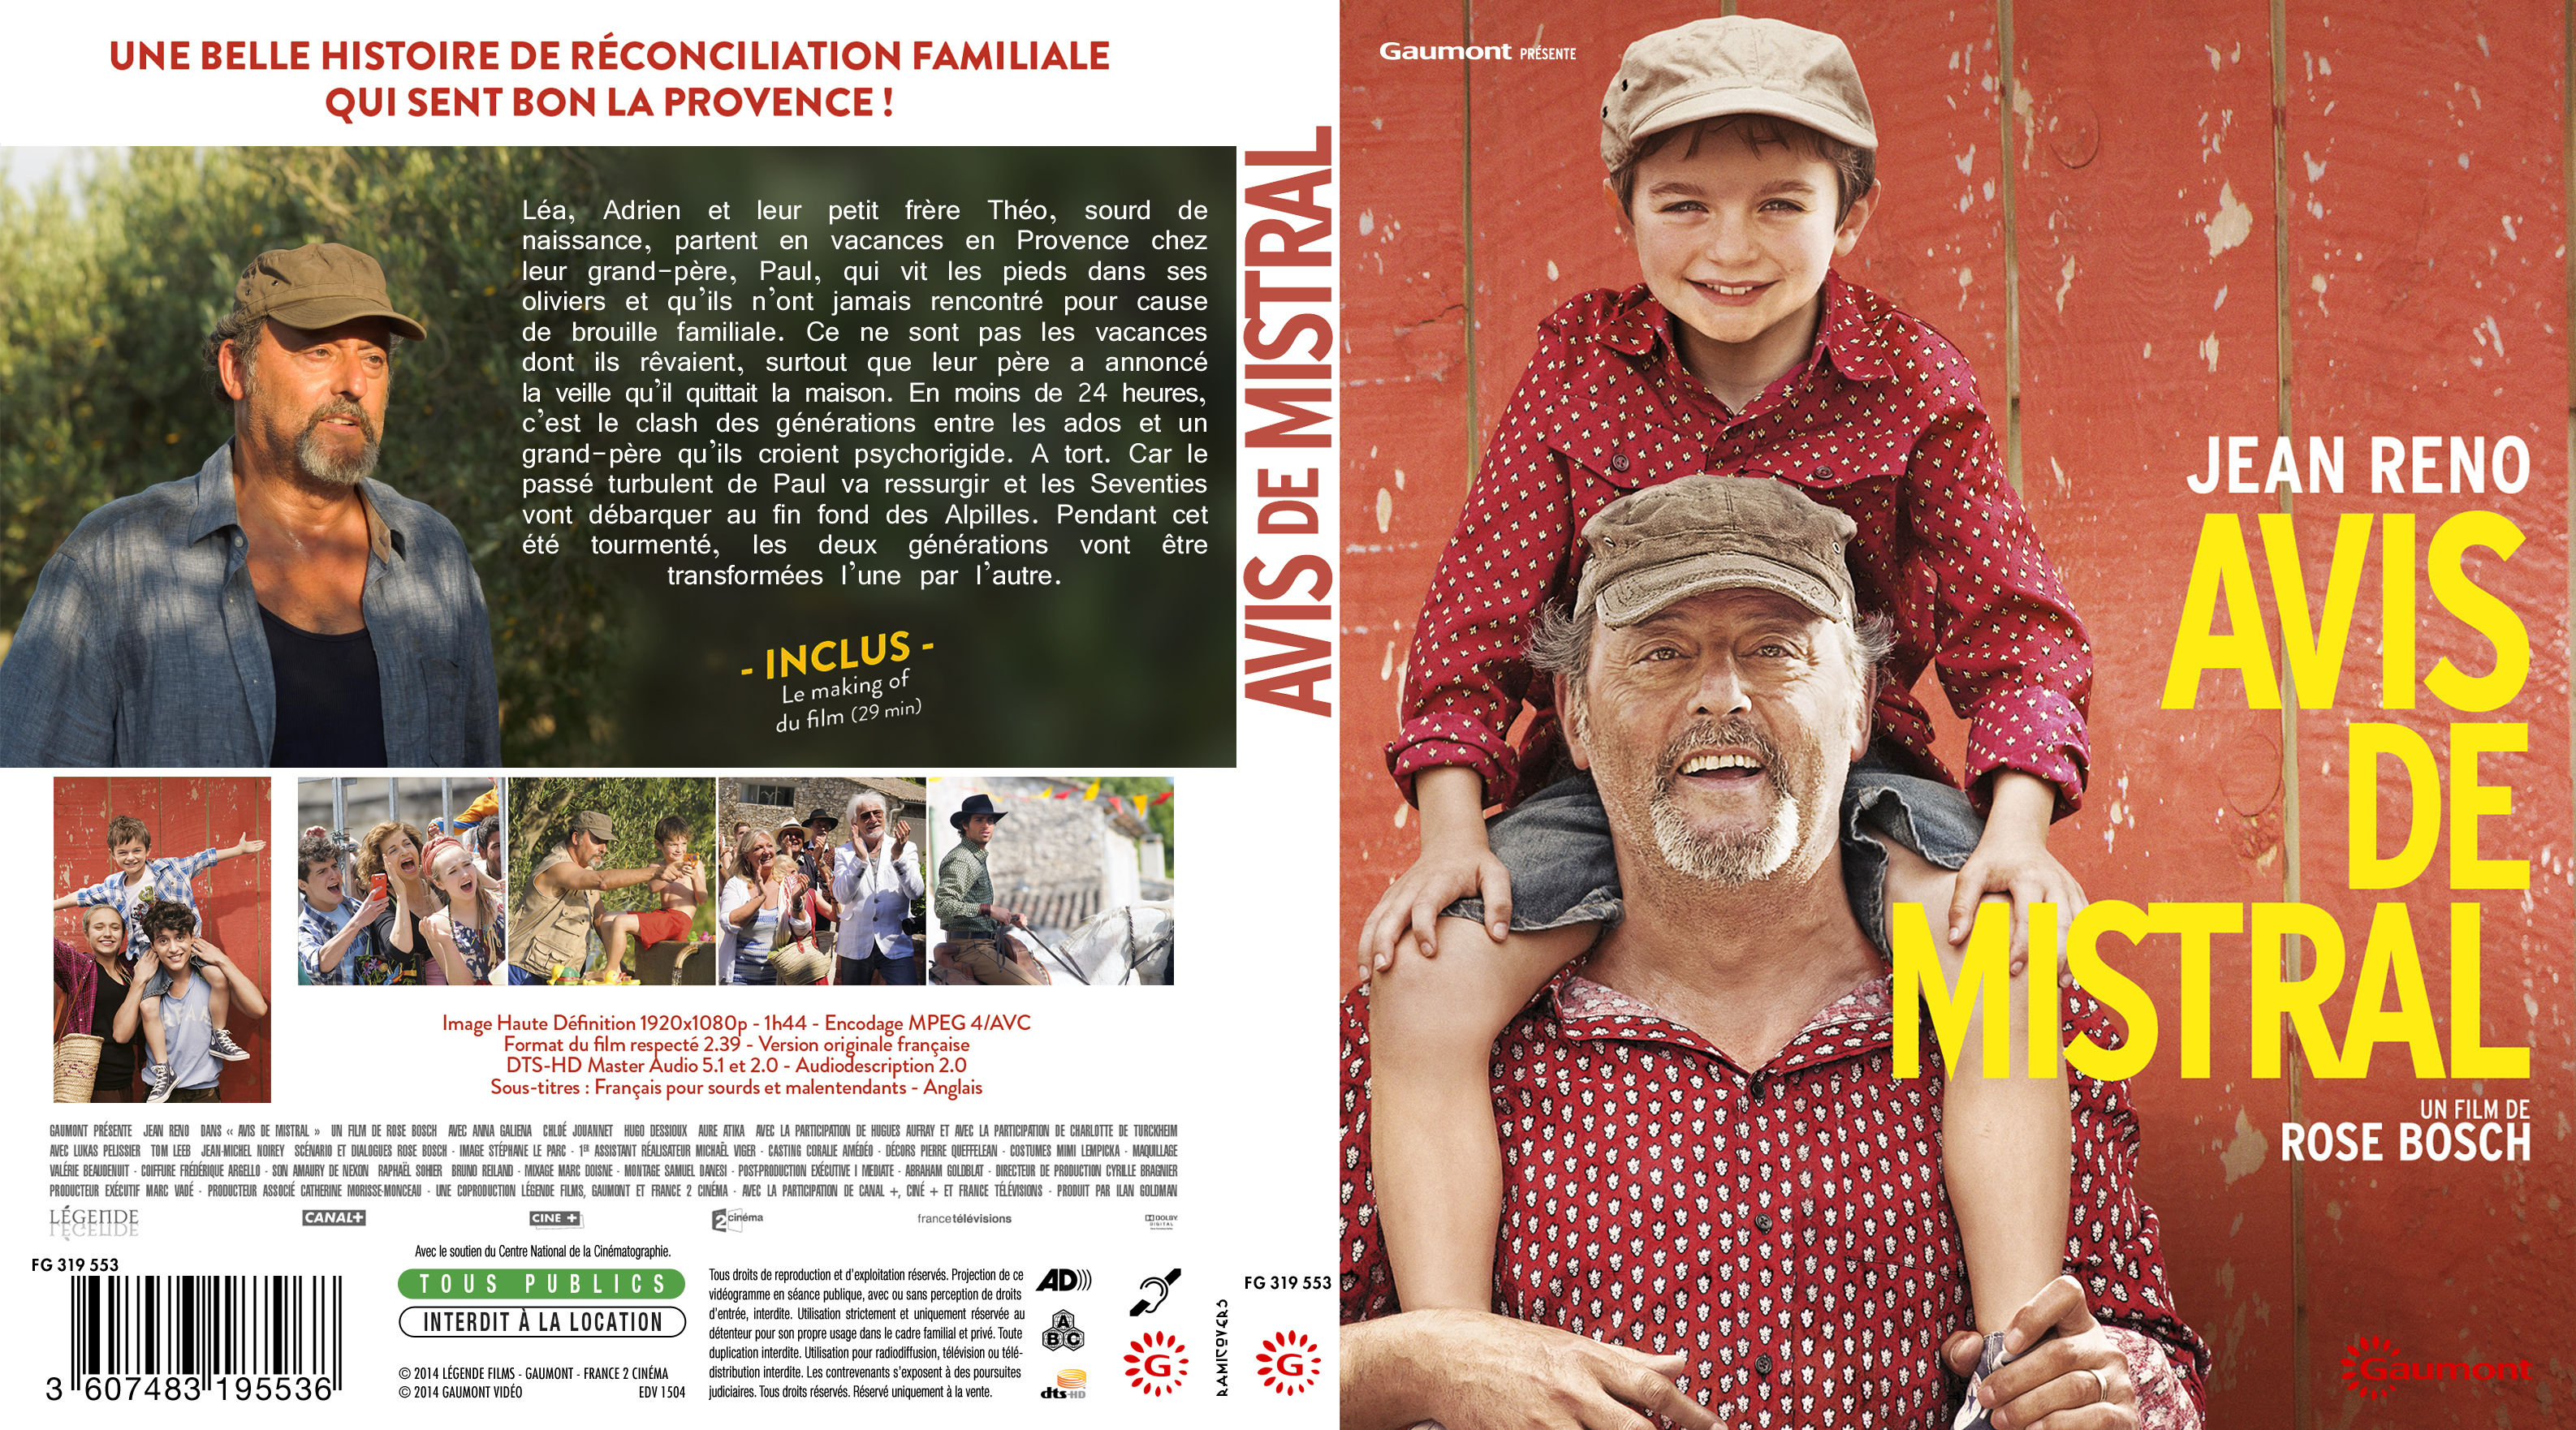 Jaquette DVD Avis de mistral custom (BLU-RAY)